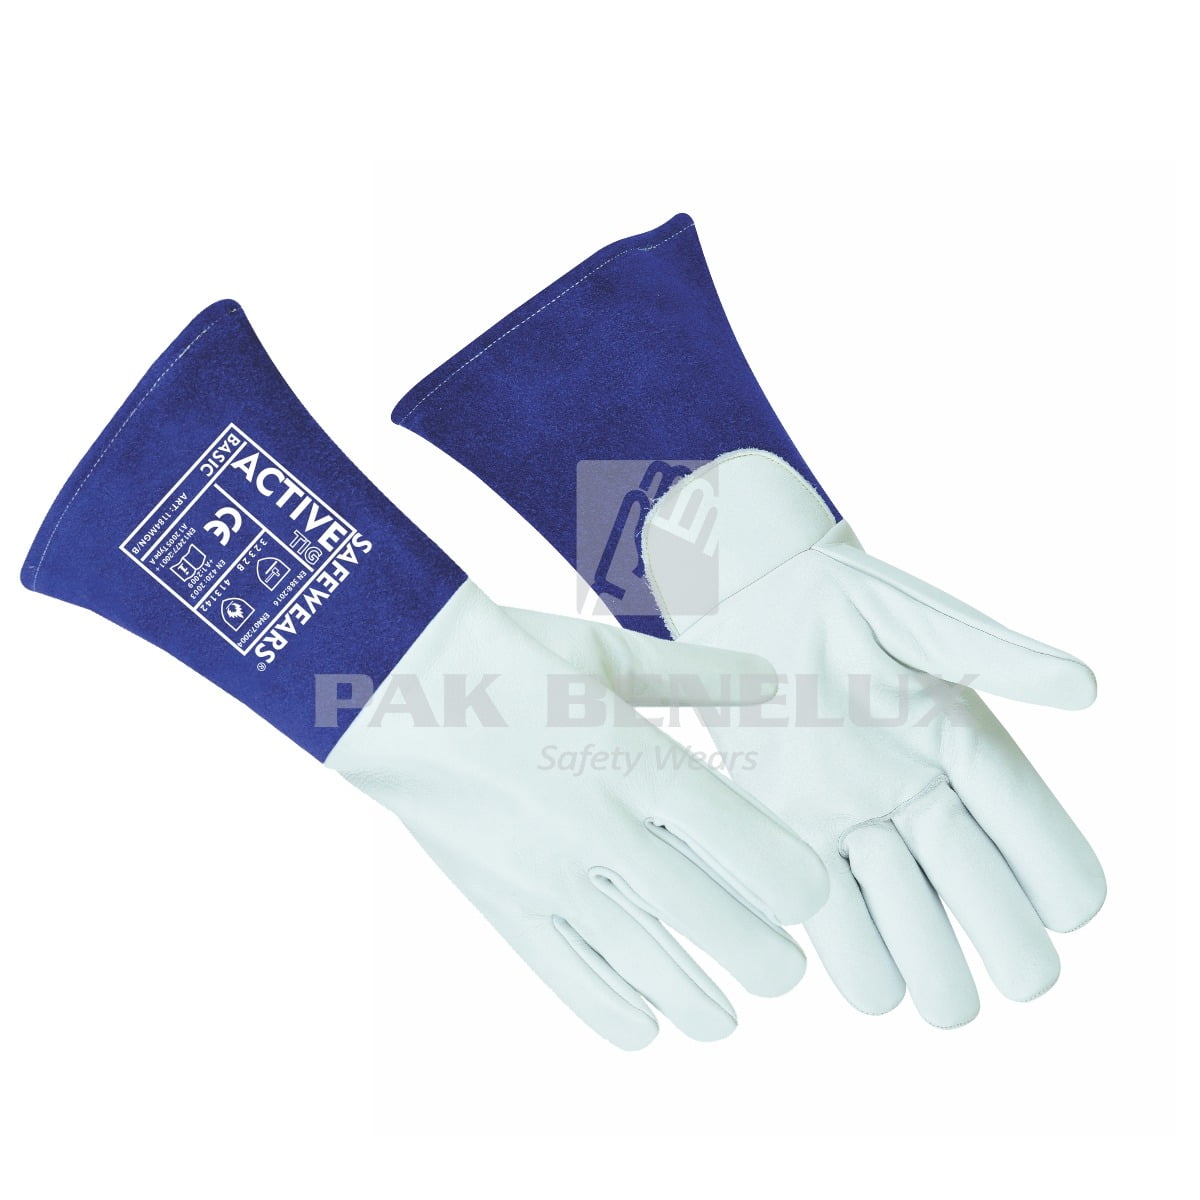 TIG Gloves Manufacturer in Pakistan